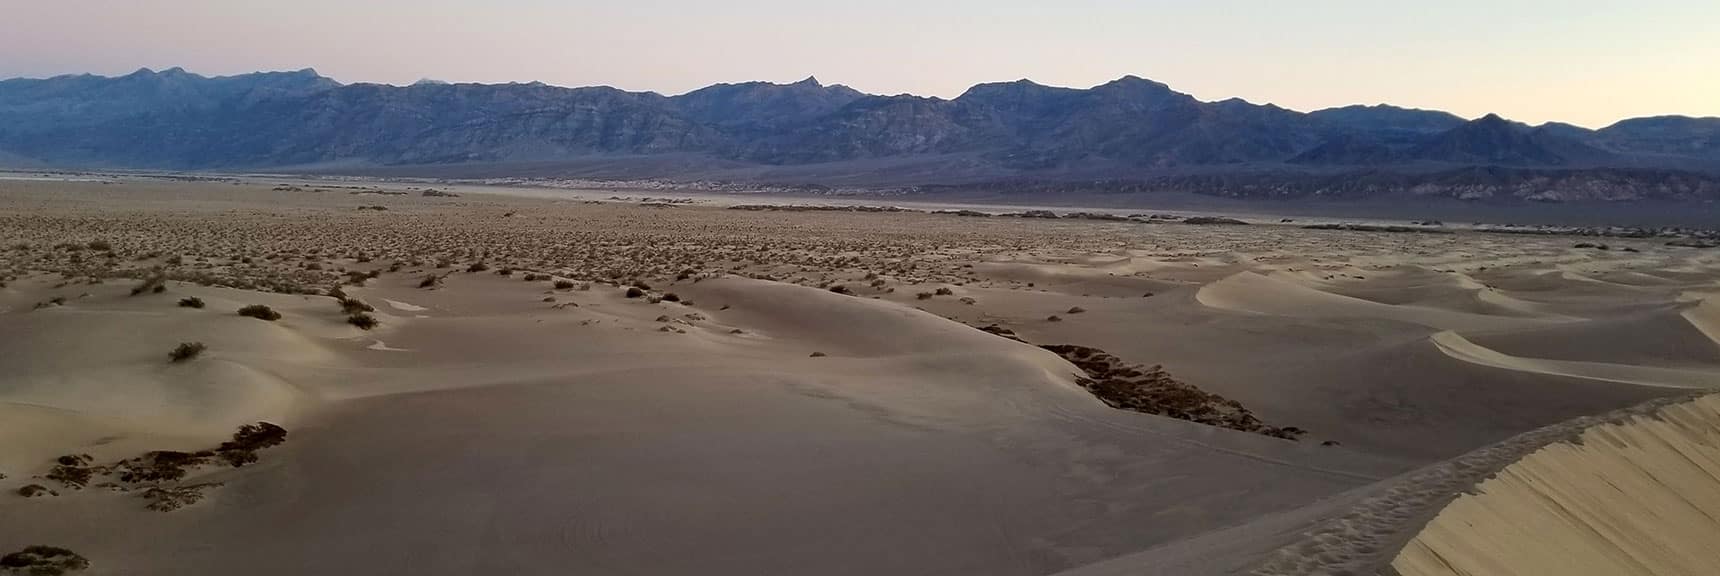 View Northeast | Mesquite Sand Dunes Sunrise | Death Valley National Park, California